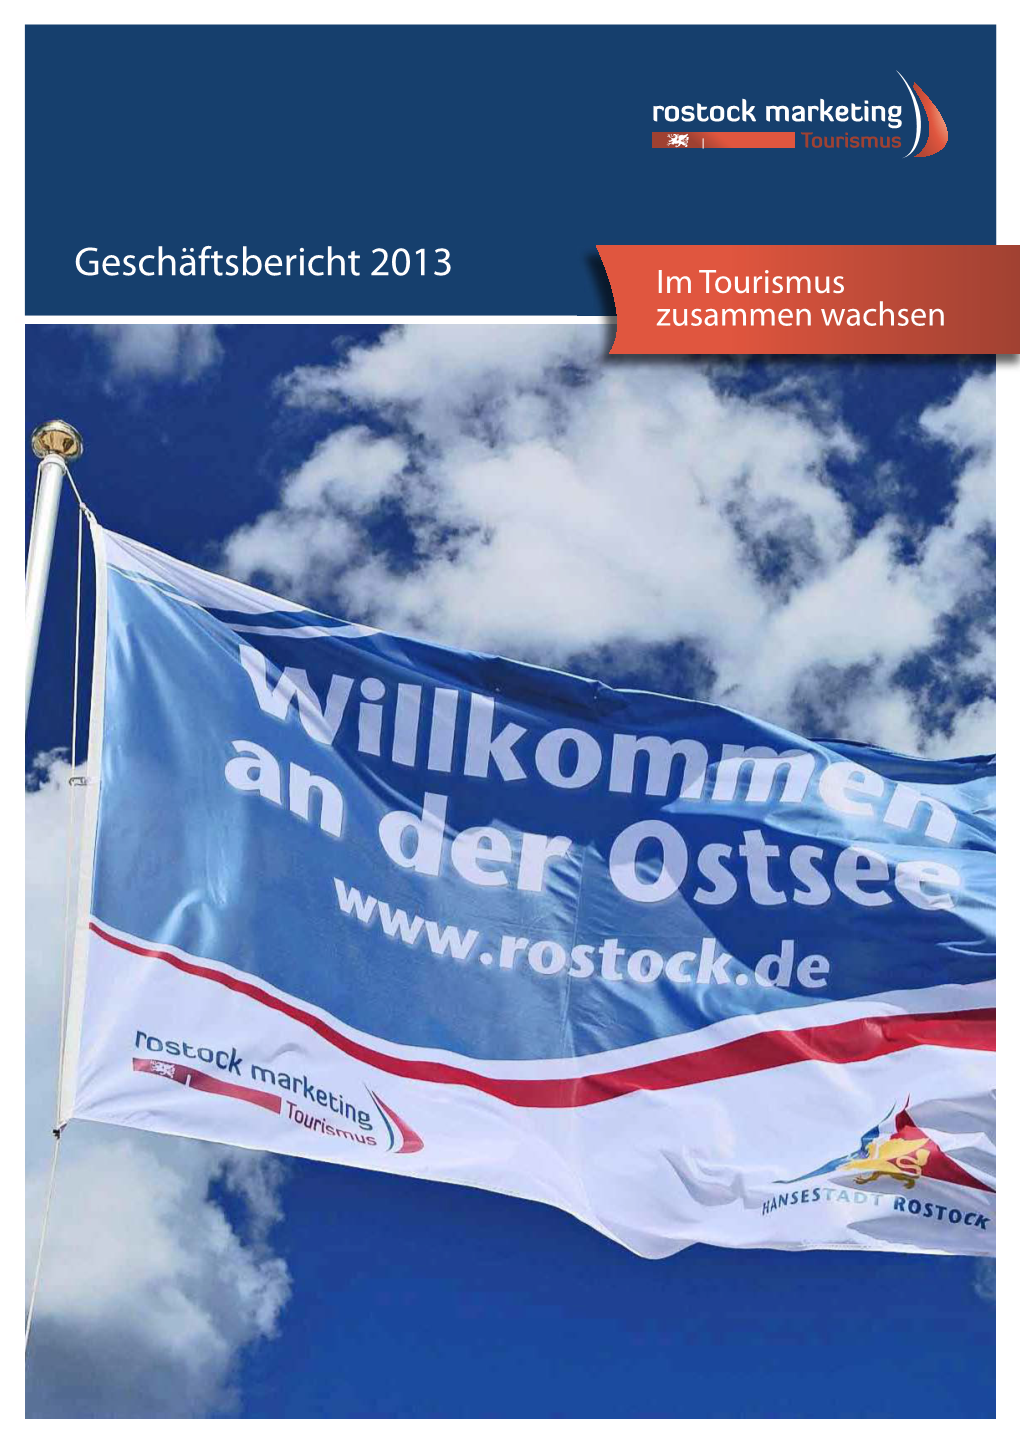 Geschäftsbericht 2013 Rostock Marketing